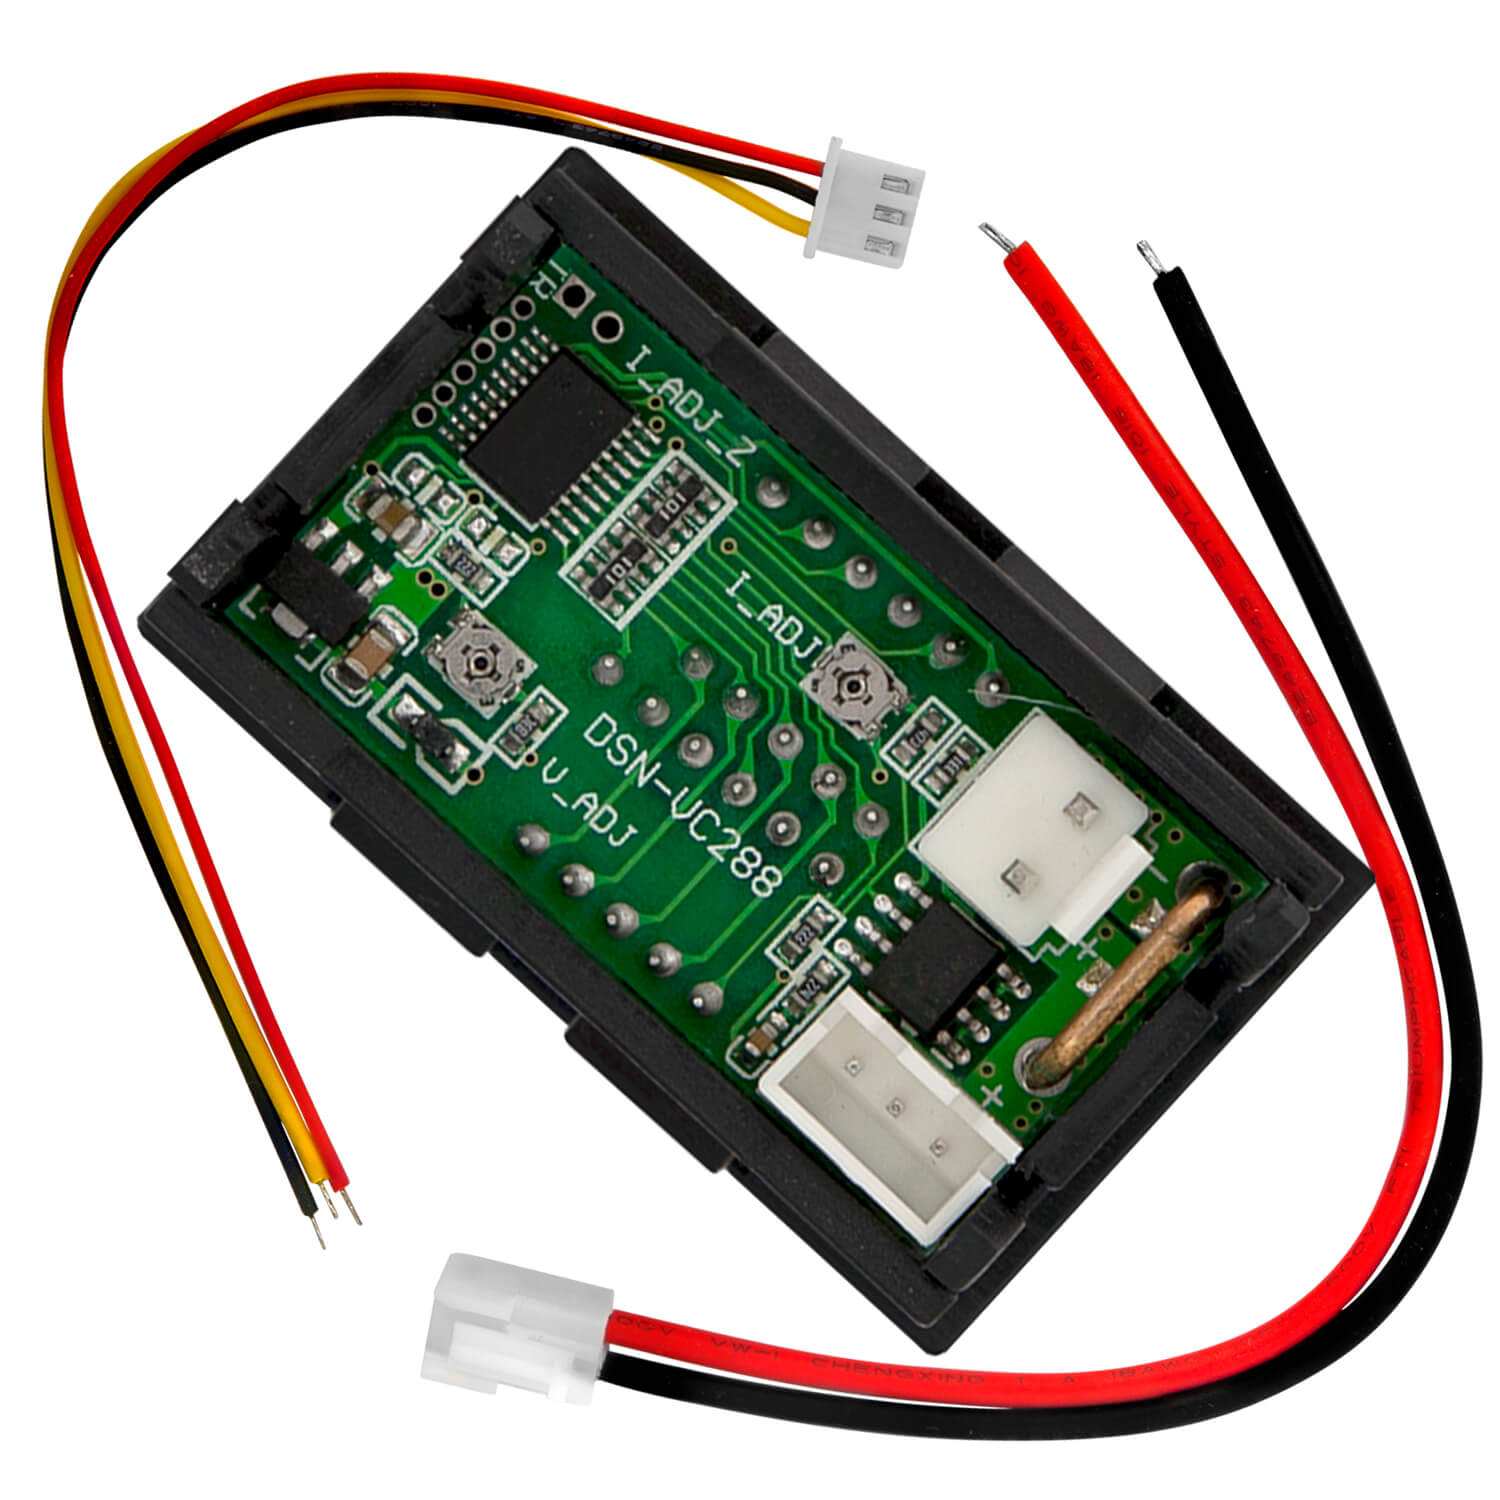 DSN-VC288 Voltmeter Amperemeter Modul mit LED Display kompatibel mit Arduino und Raspberry Pi - AZ-Delivery